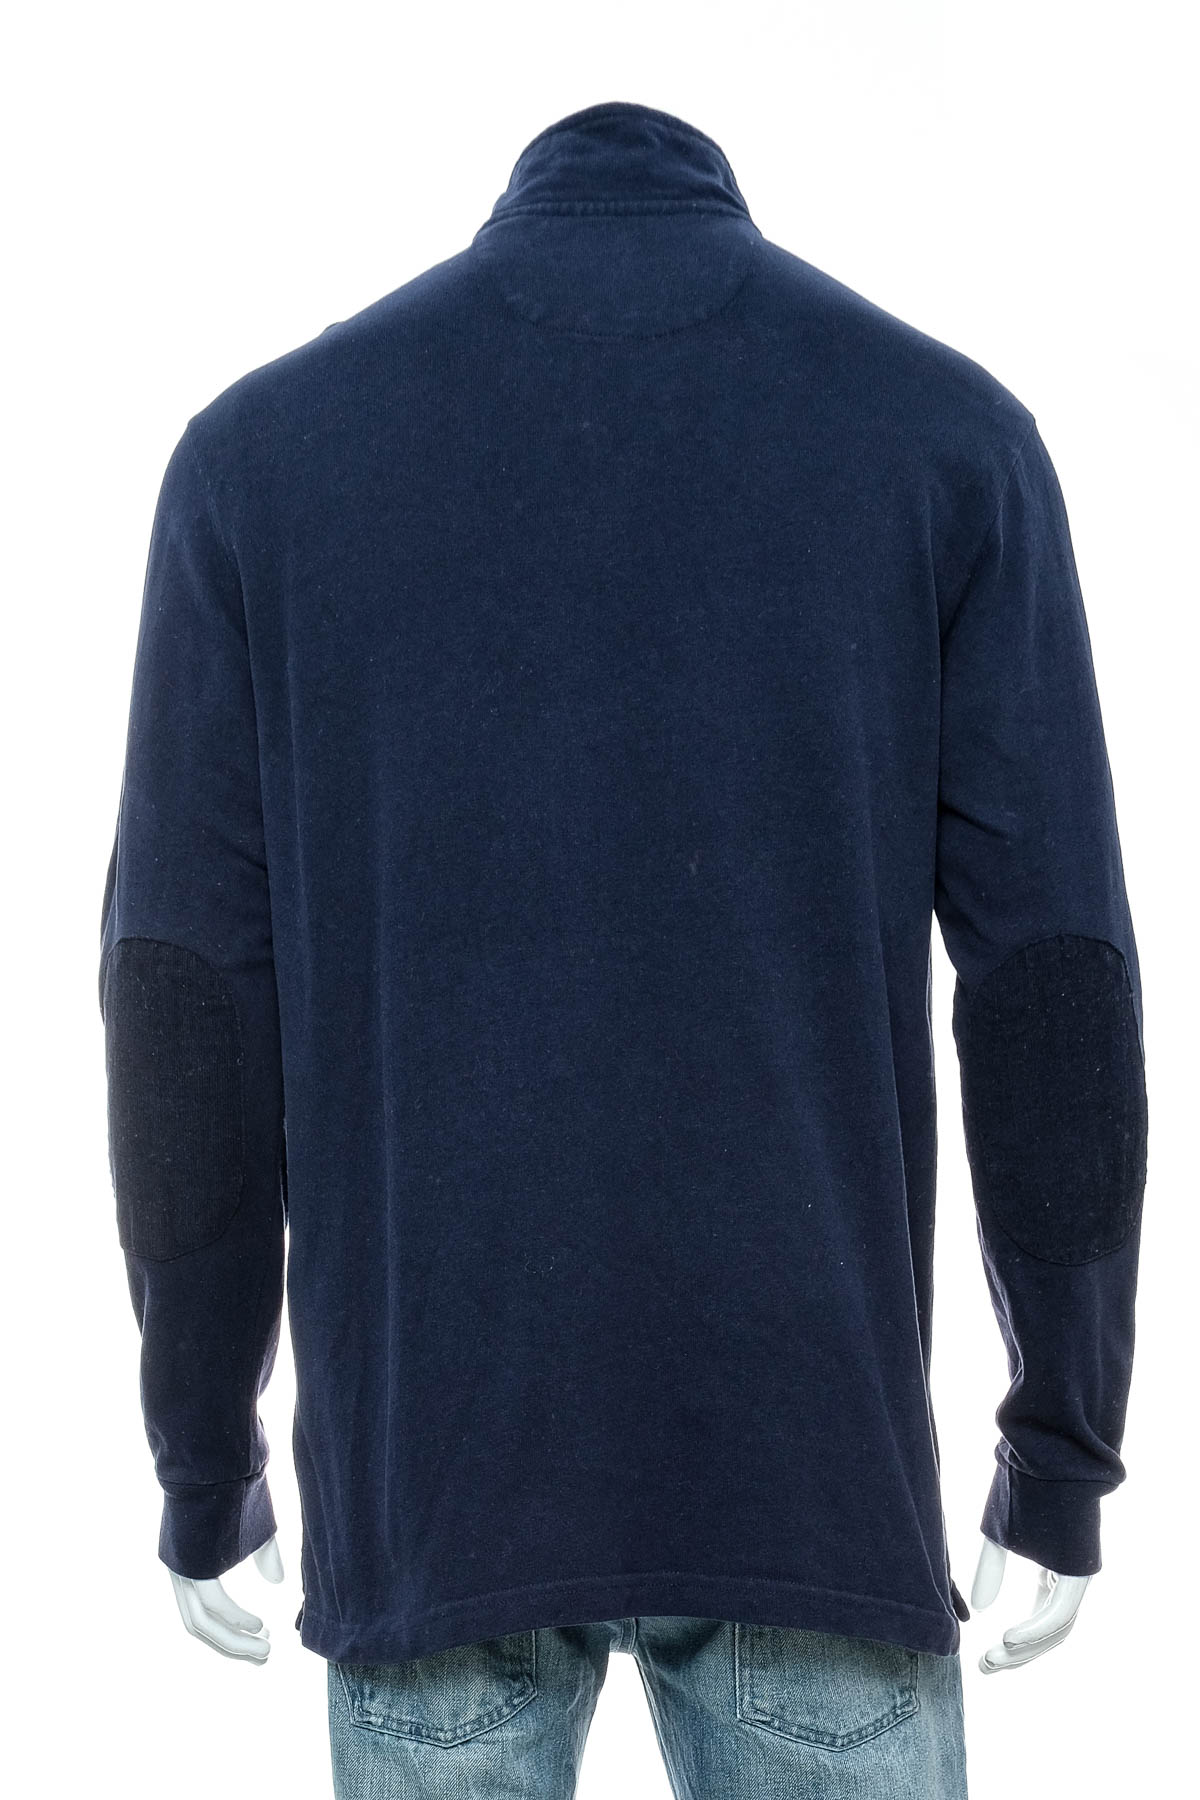 Men's sweater - Chaps - 1